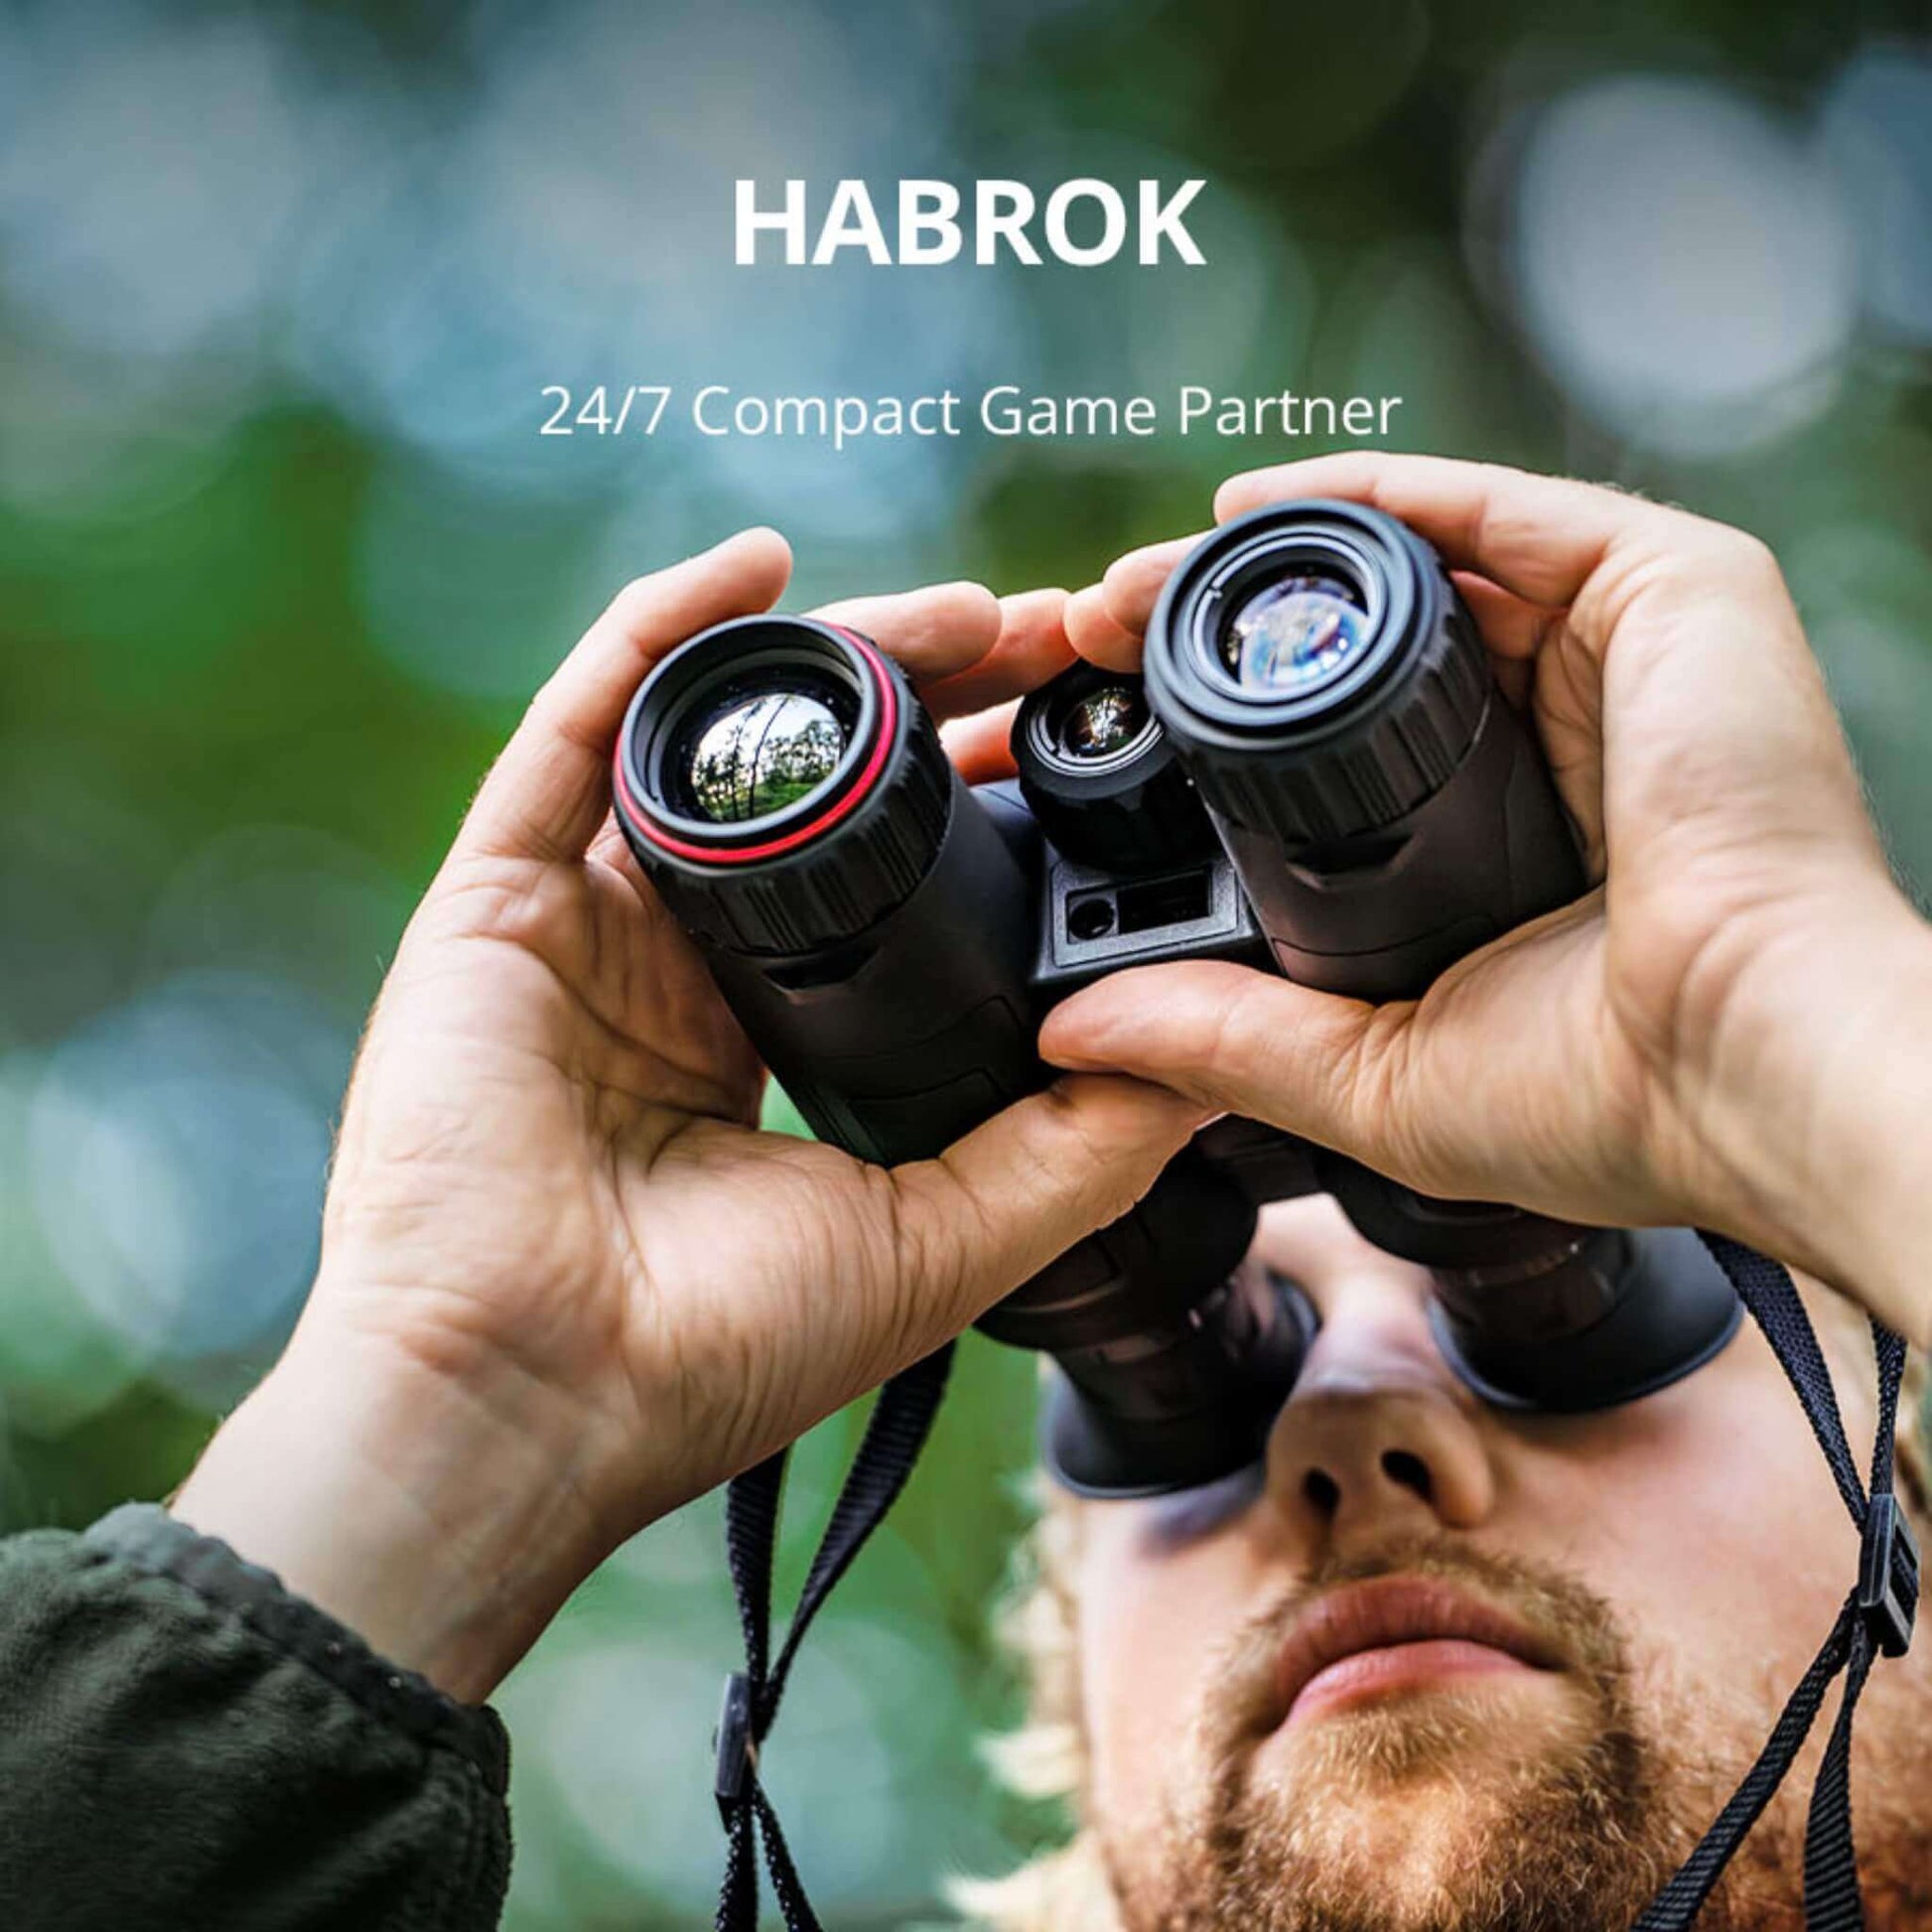 HikMicro Habrok Multi-Spectrum Binoculars with Thermal Imaging - Compact Multi-Function 24/7 imaging